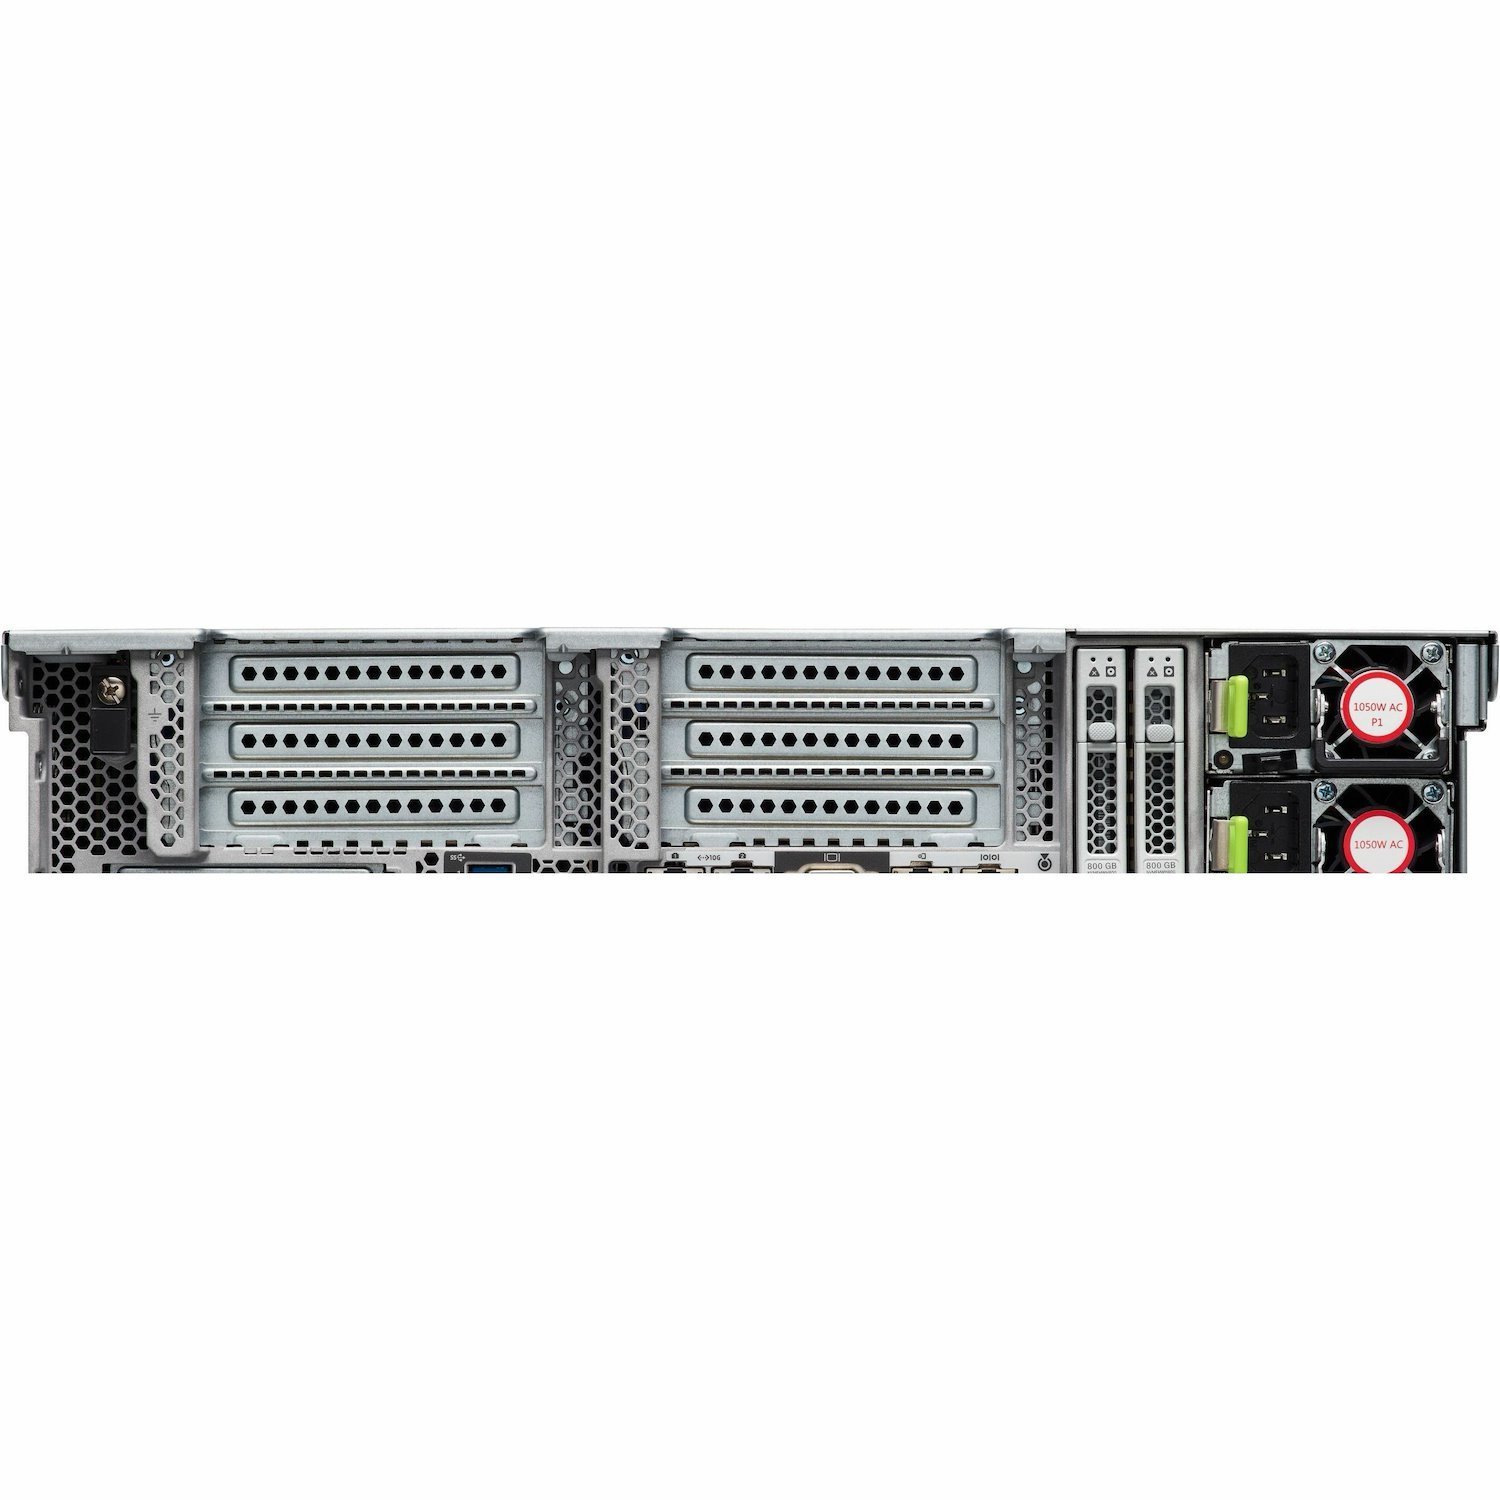 Cisco HyperFlex HX240c M5 2U Rack Server - 2 x Intel Xeon Gold 6142 2.60 GHz - 384 GB RAM - 12Gb/s SAS, Serial ATA/600 Controller